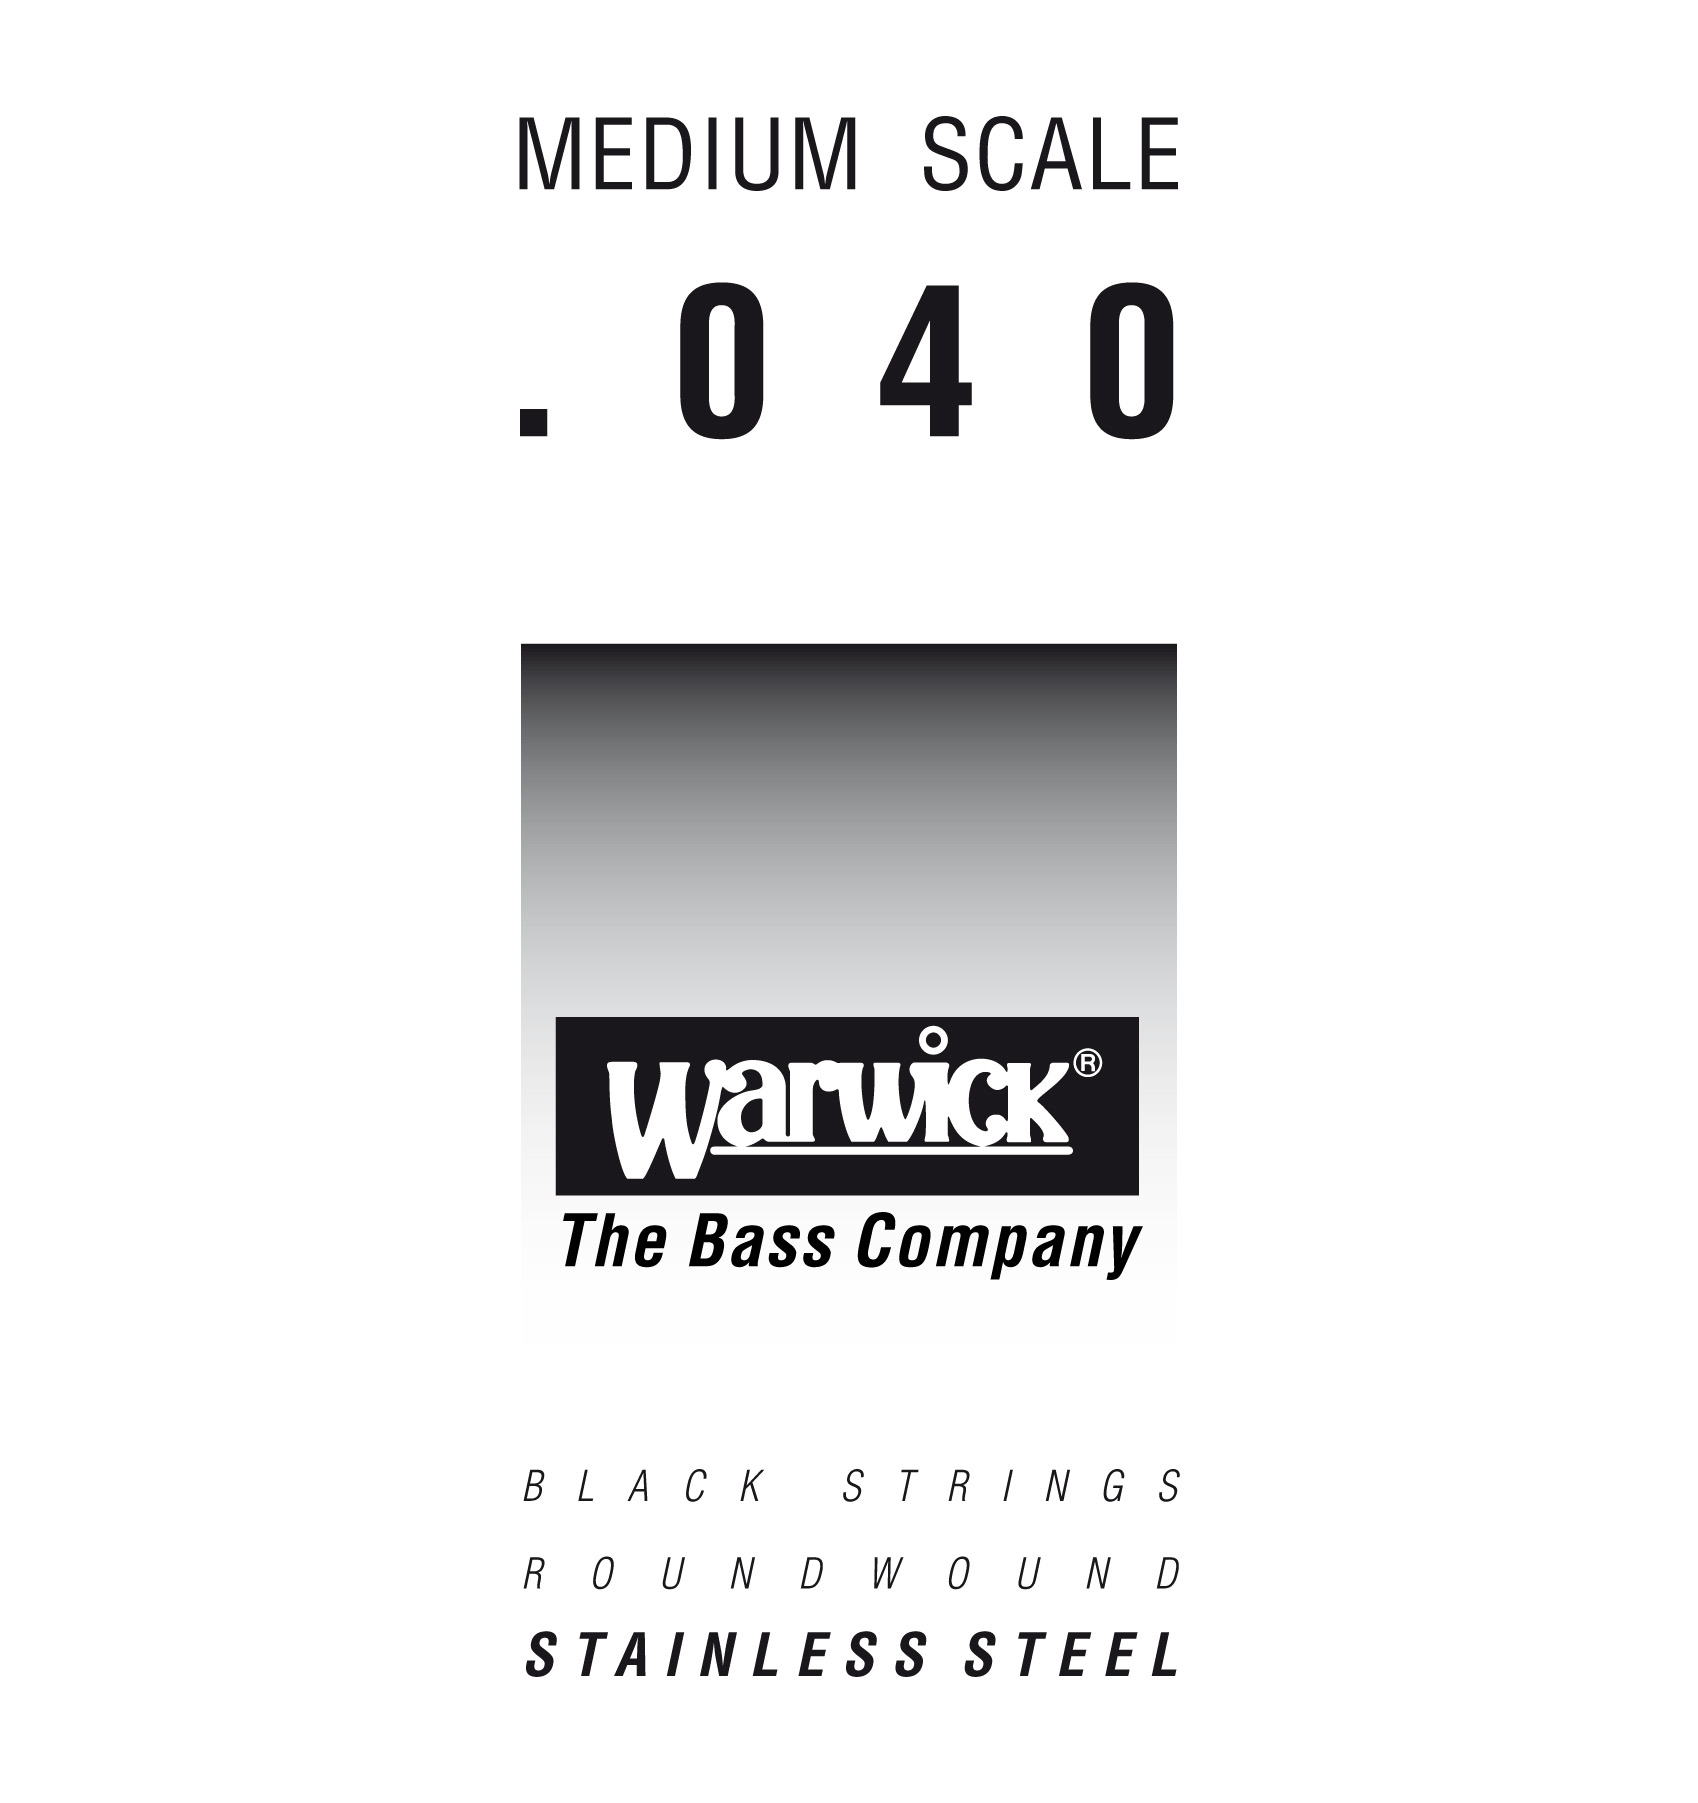 Warwick Black Label Bass Strings, Stainless Steel - Bass Single String, .040", Medium Scale